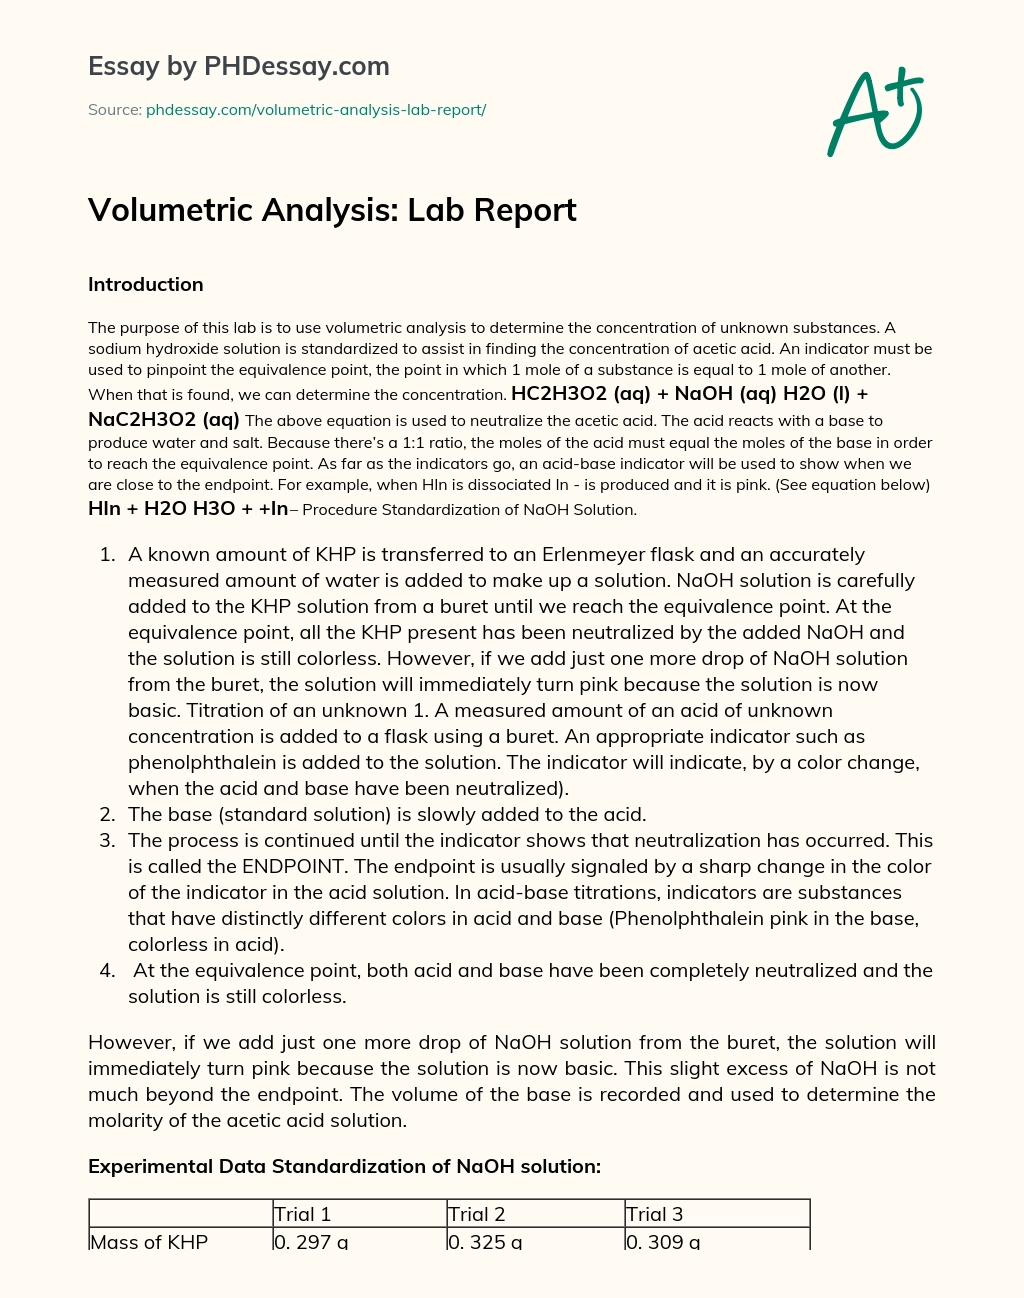 Volumetric Analysis: Lab Report essay